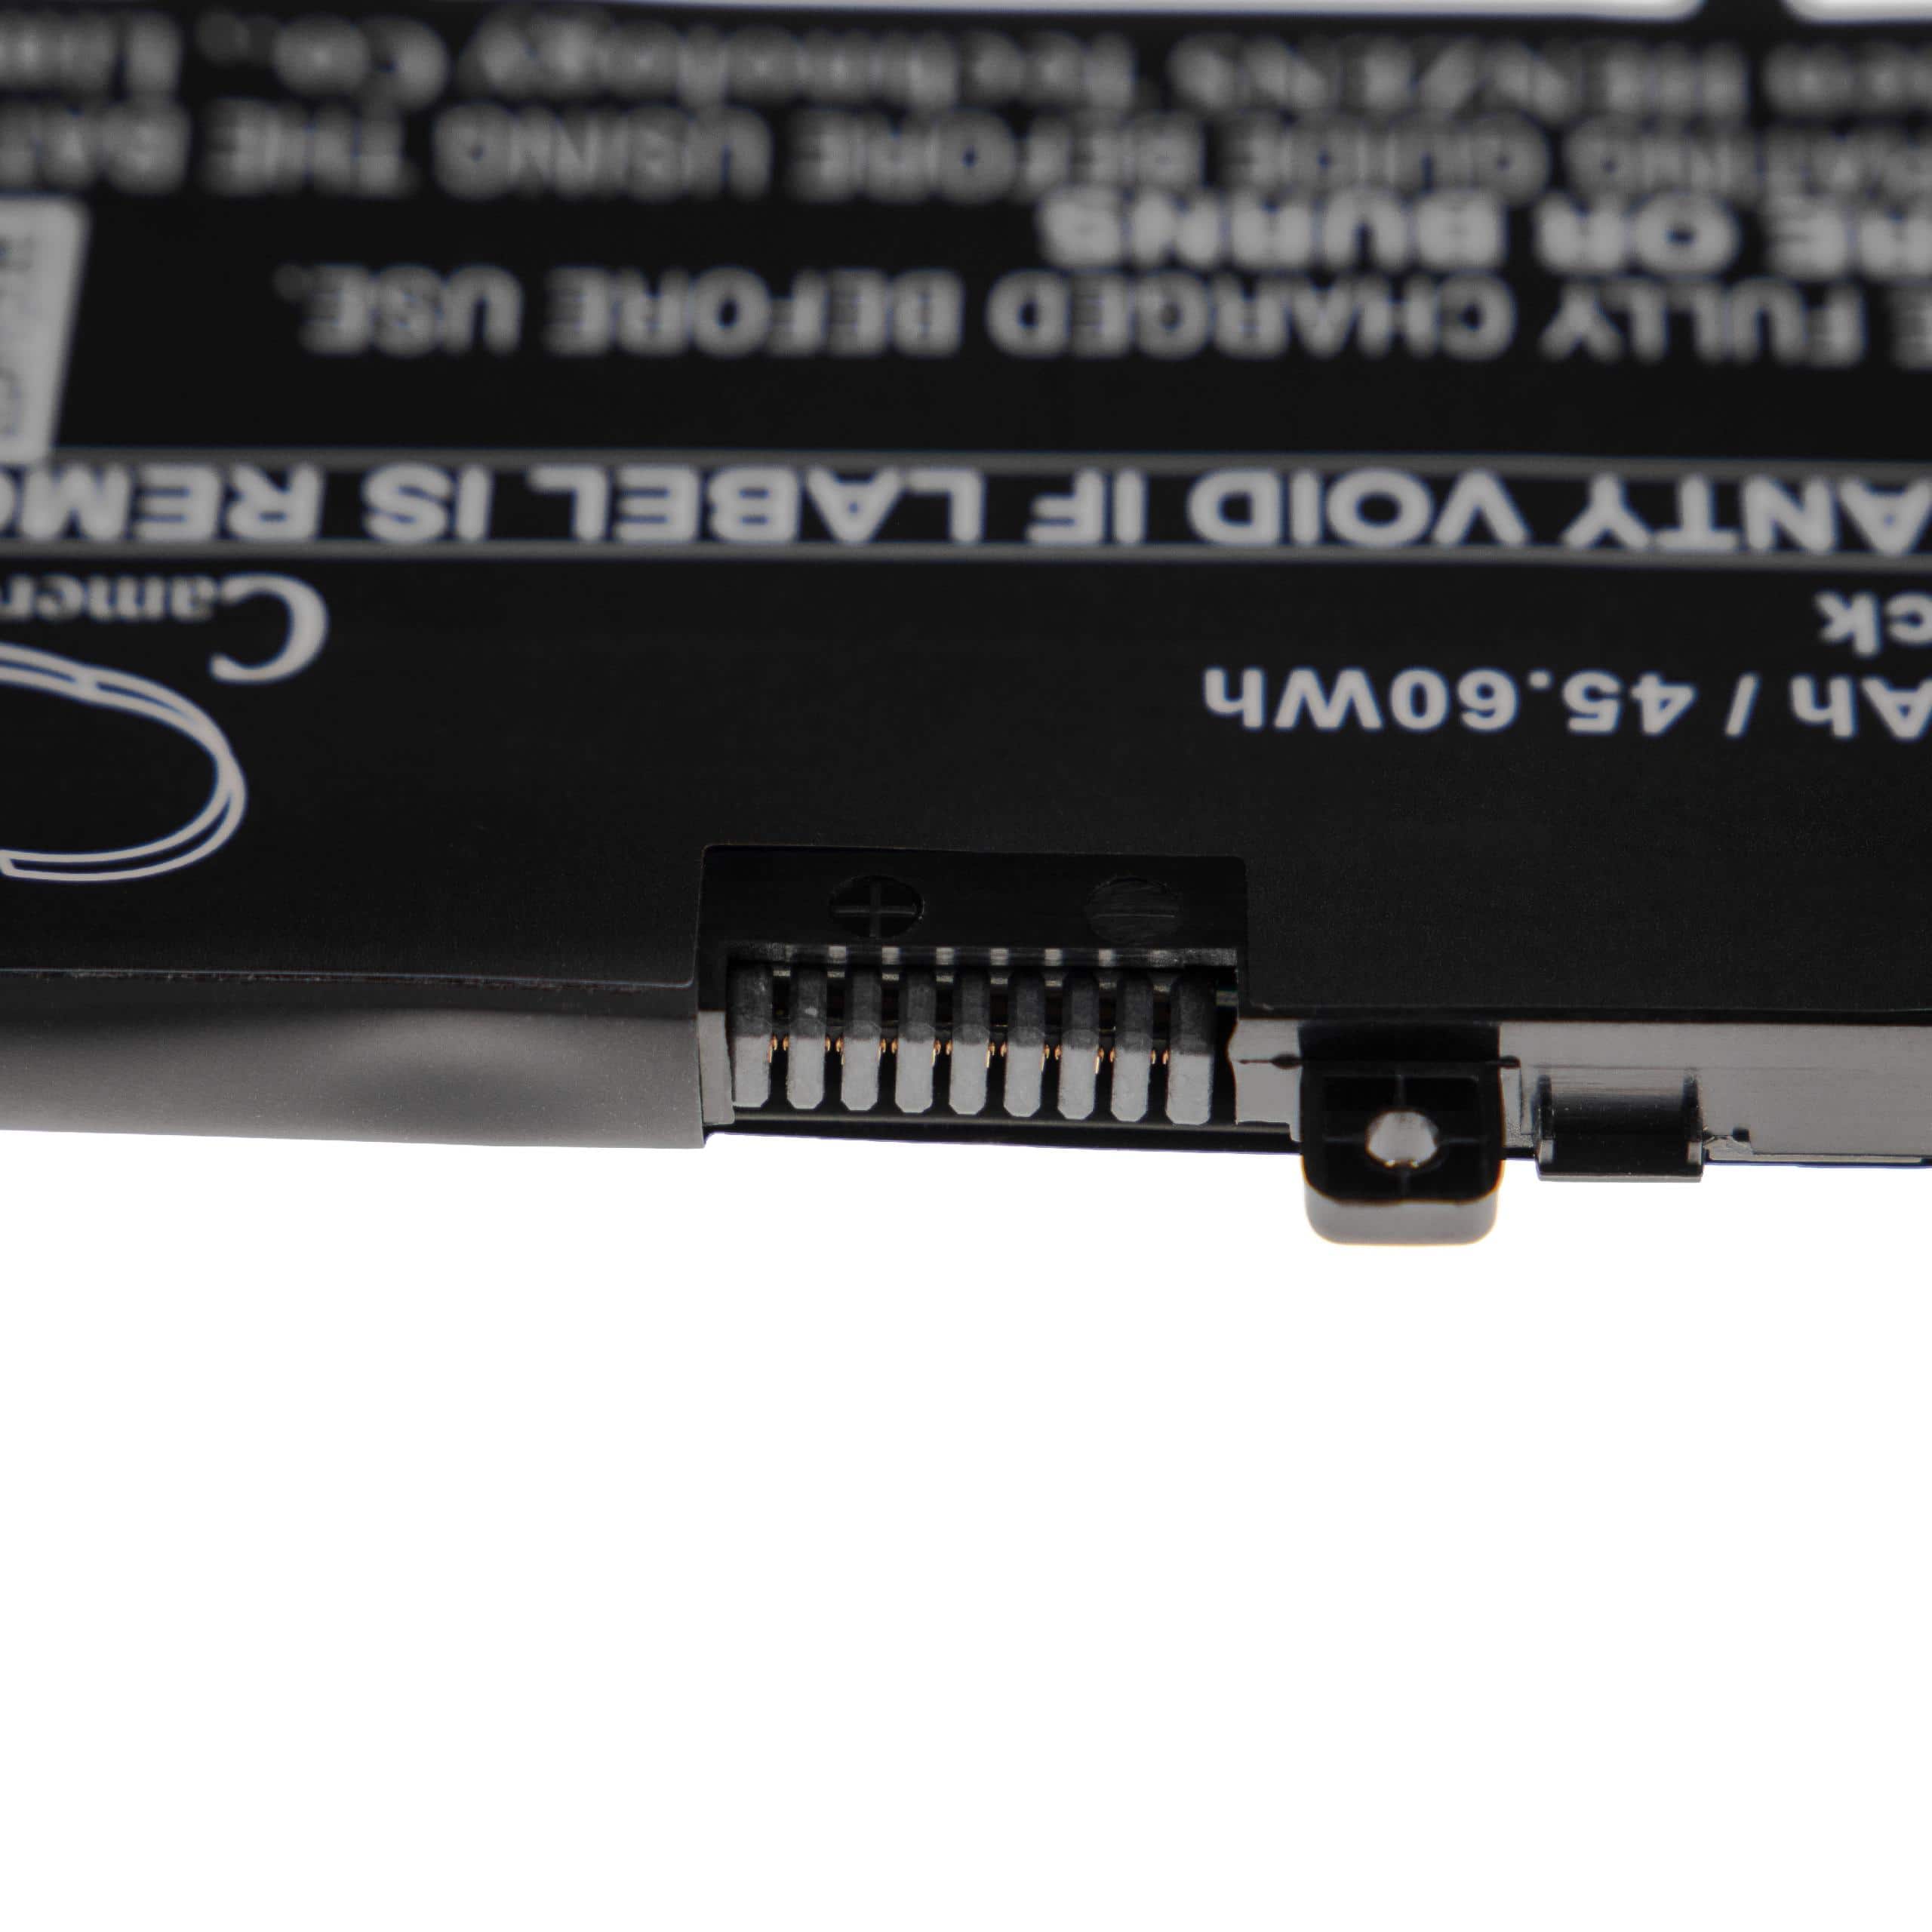 Notebook Battery Replacement for Asus B31N1535, 0B200-02020000 - 4000mAh 11.4V Li-polymer, black